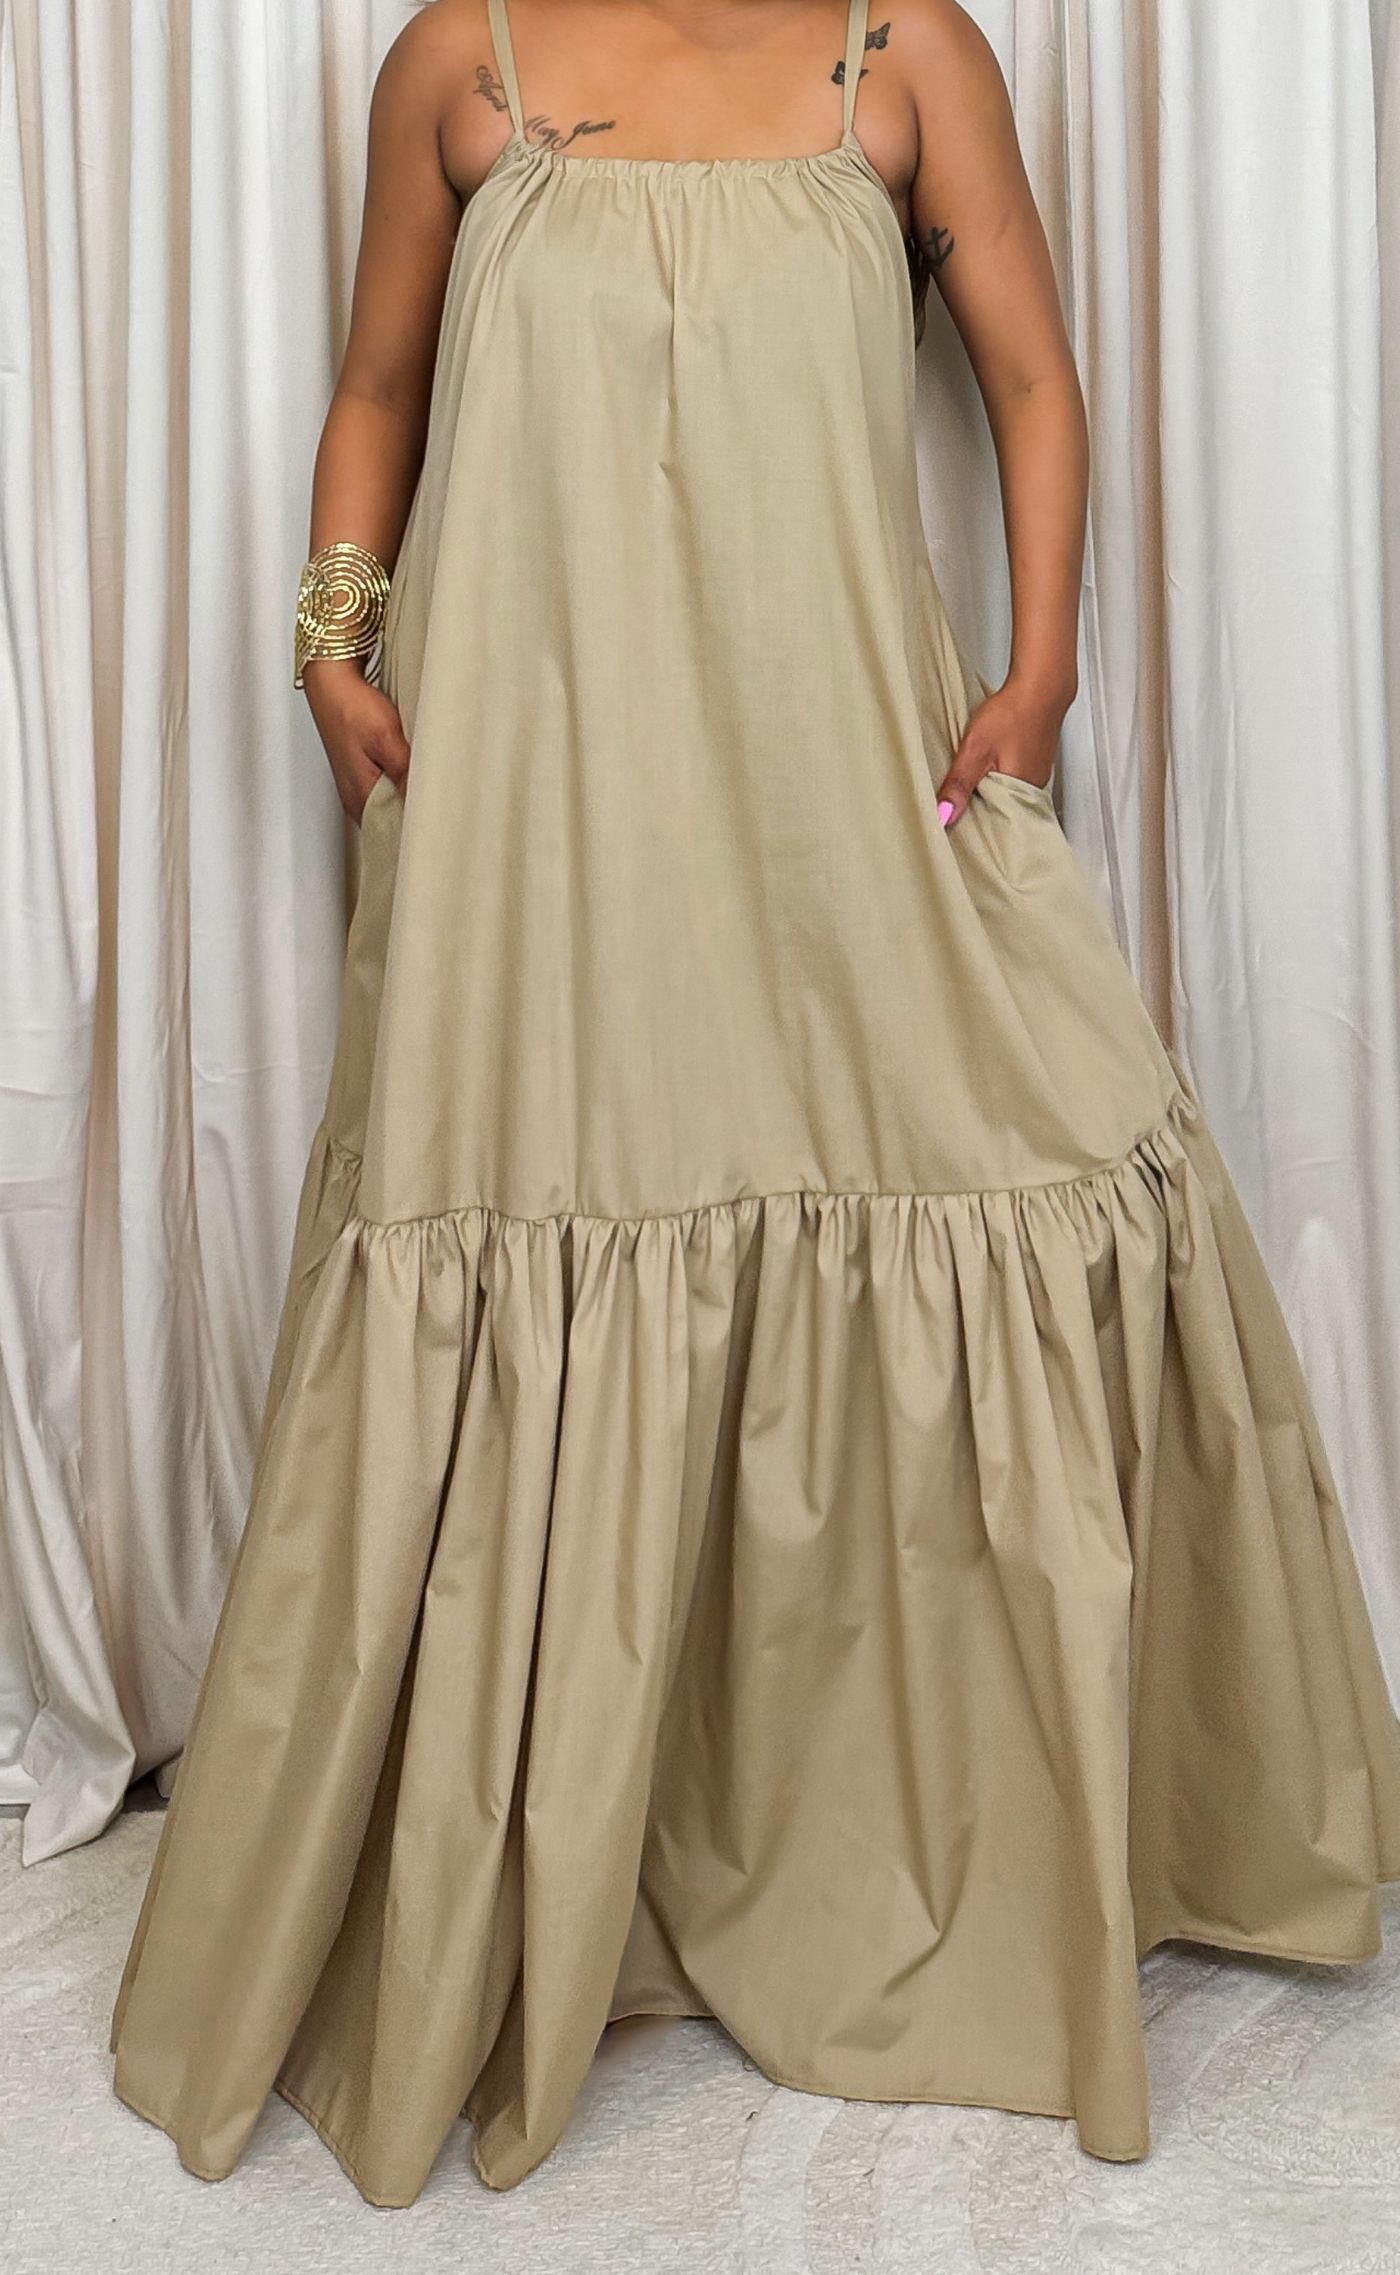 Khaki maxi dress | One size fits most 0-18